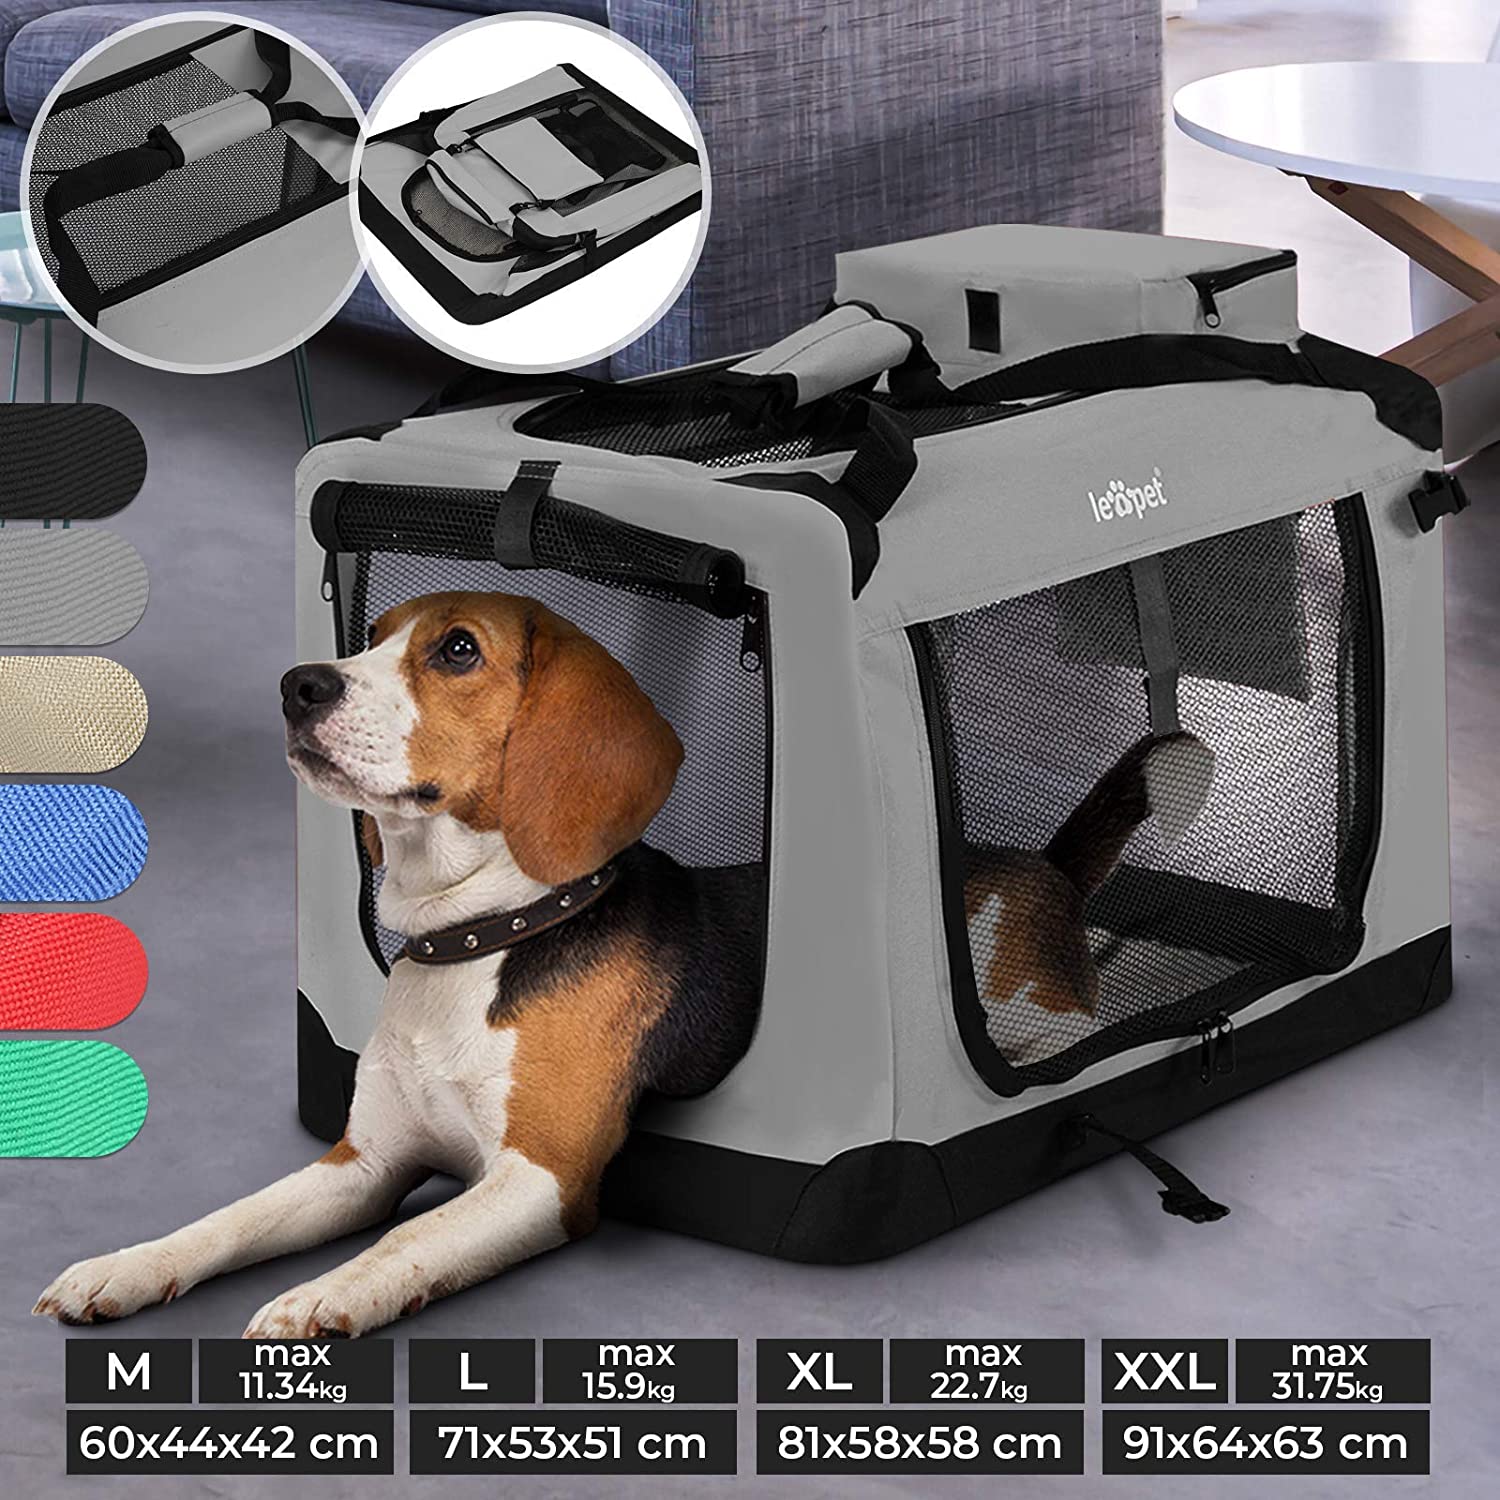 Hondenbox – Transporttas – Inklapbaar – Maat XXL – 91 x 64 x 63 cm – Grijs